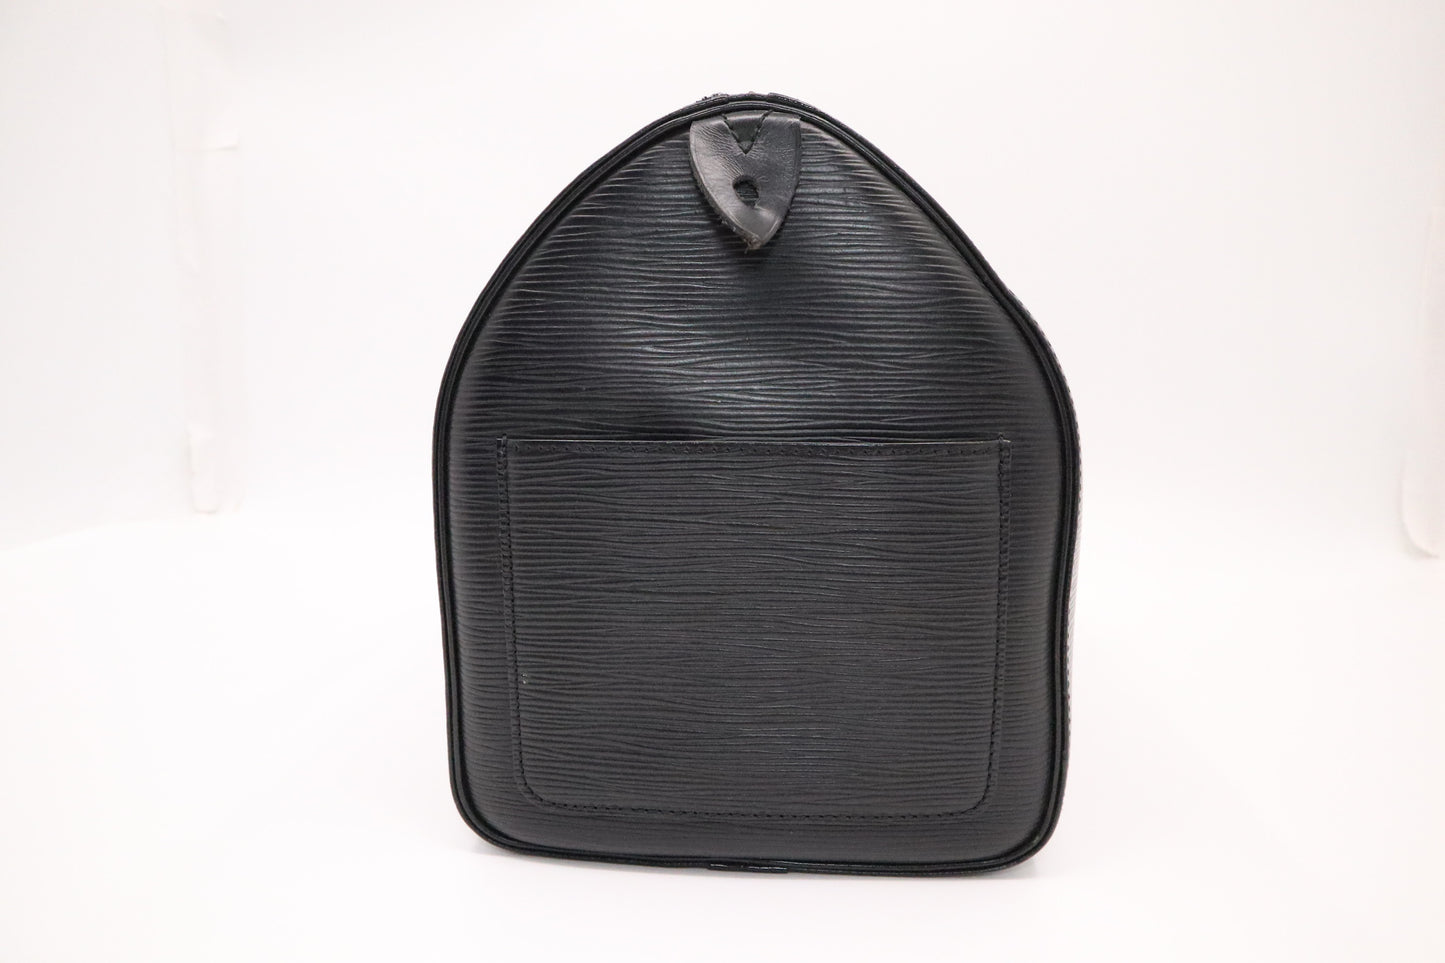 Louis Vuitton Speedy 30 in Black Epi Leather